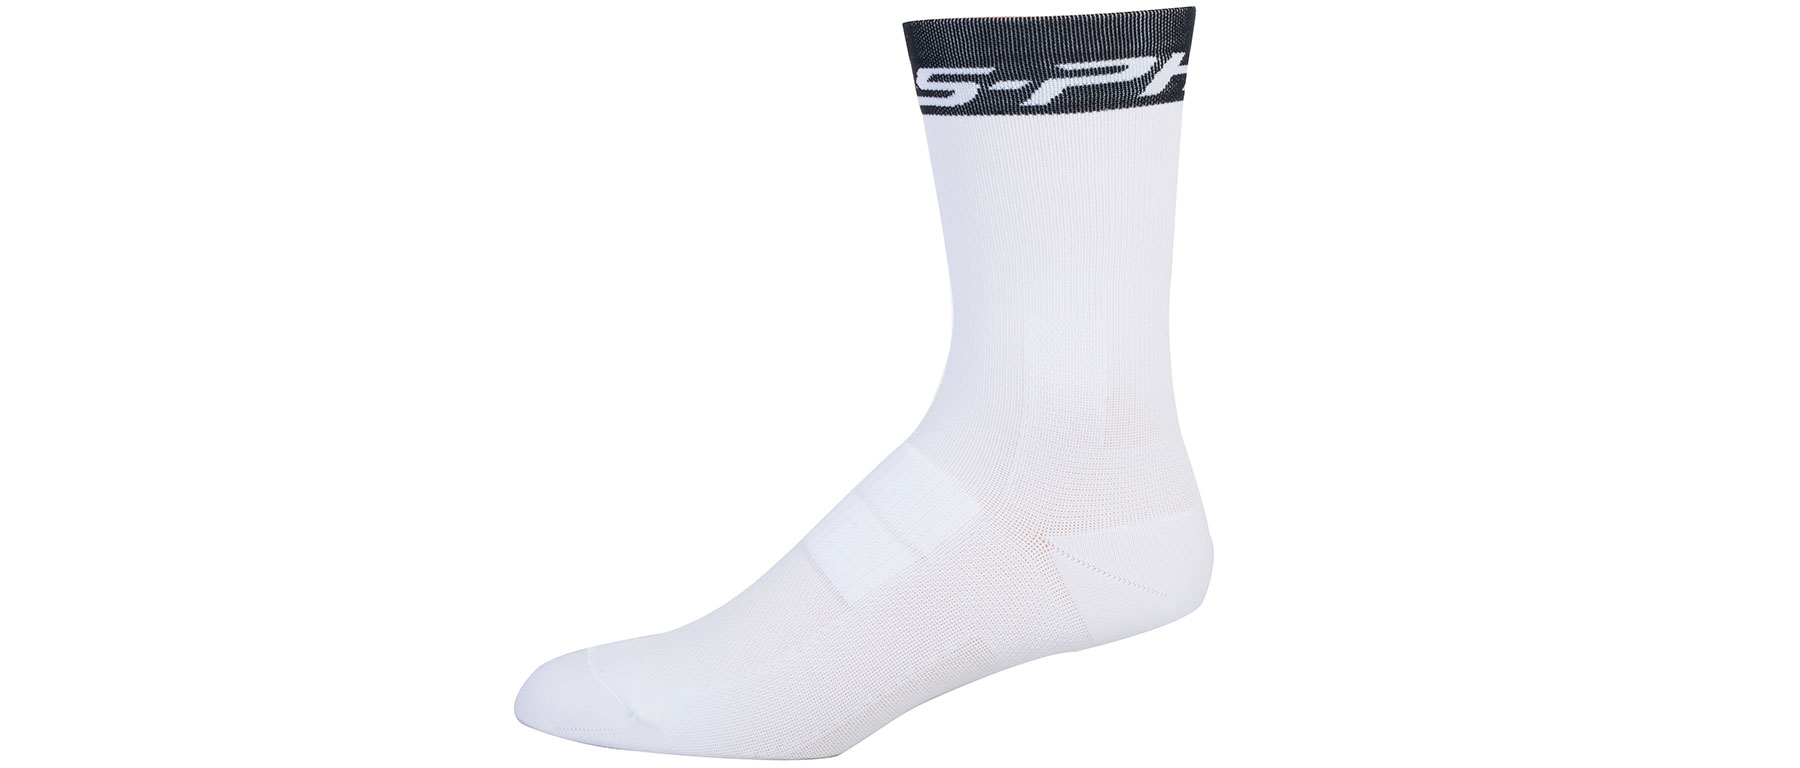 Shimano S-Phyre Tall Socks 2017